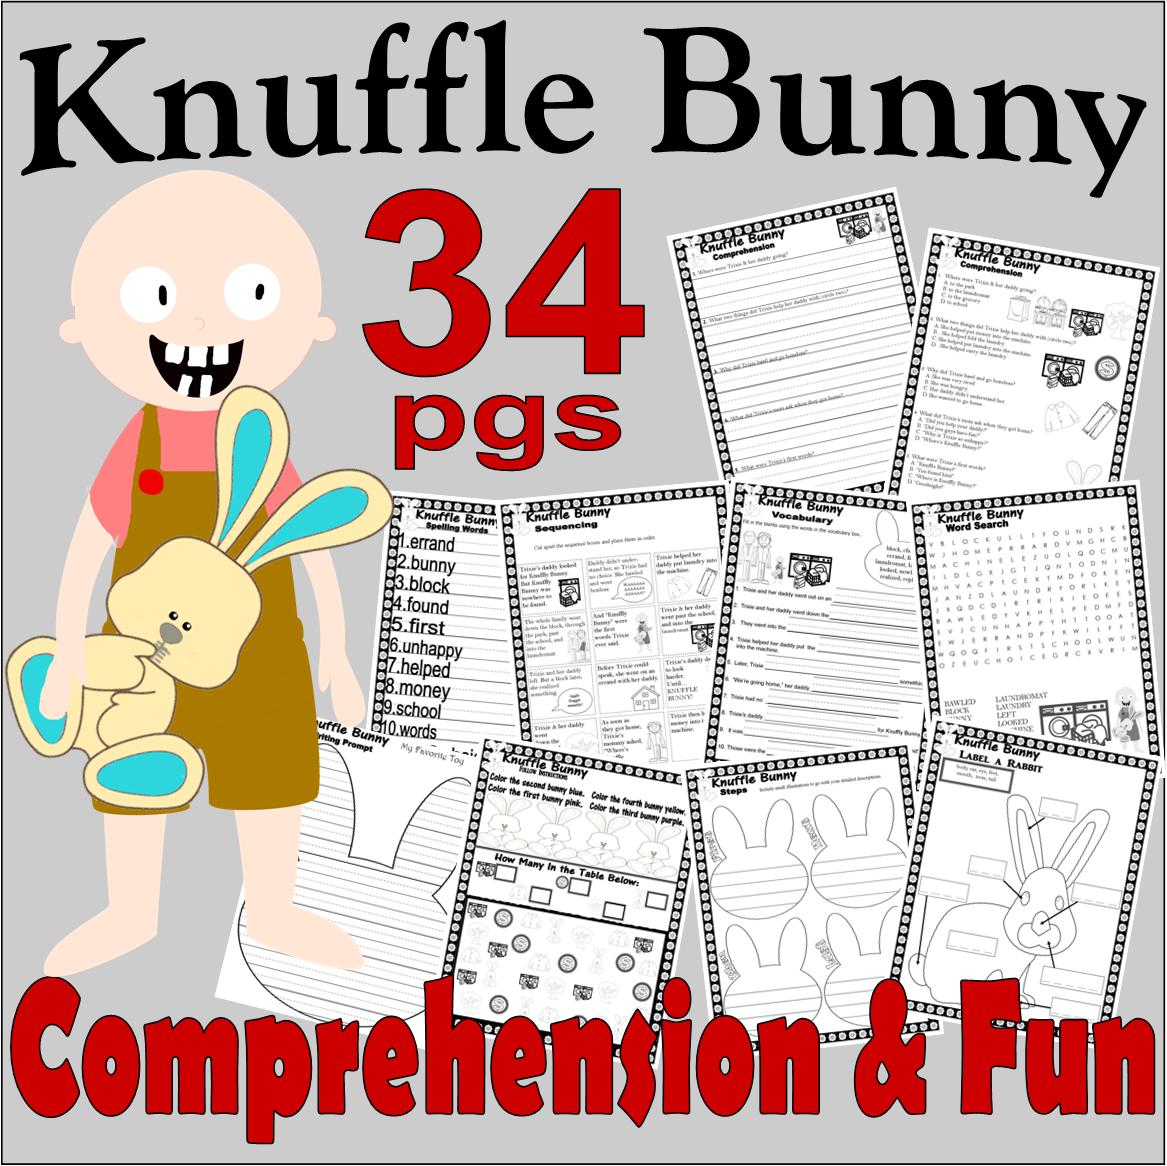 Knuffle bunny book panion reading prehension study quiz made by teachers